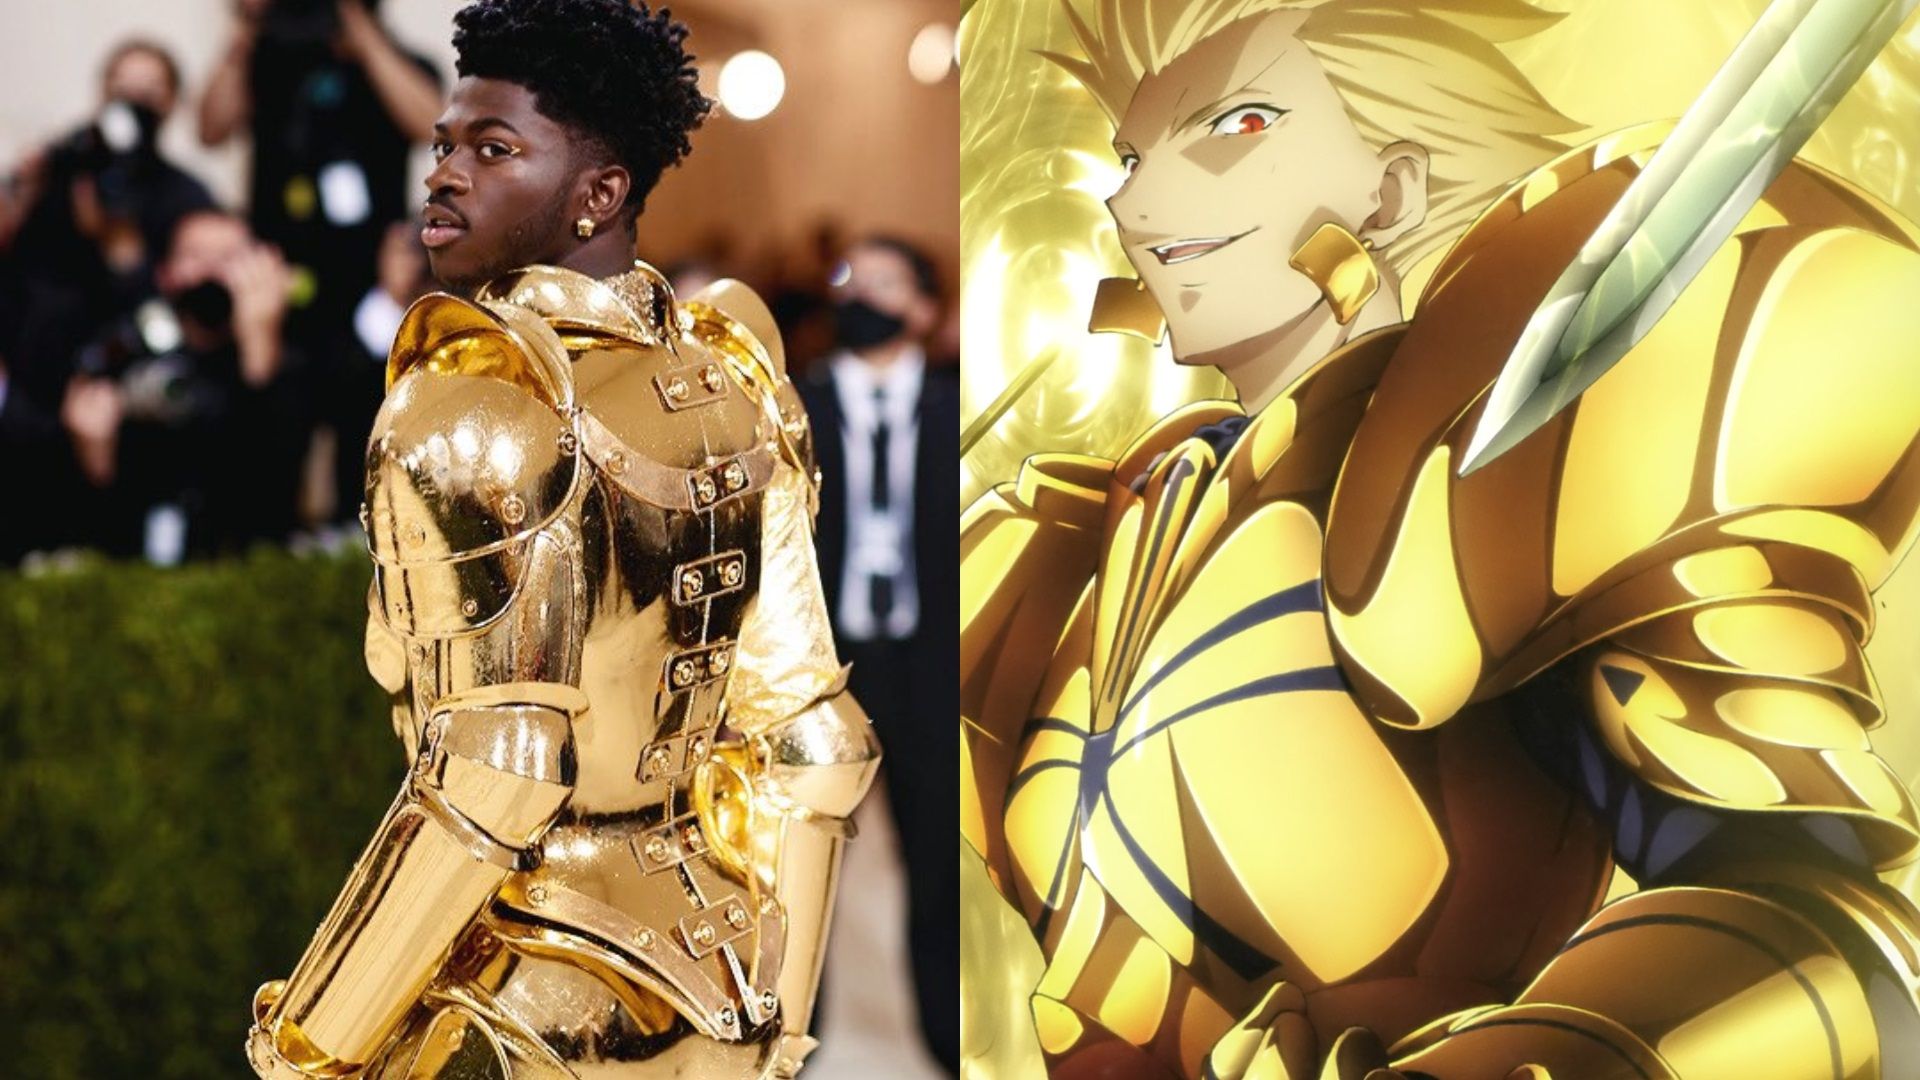 Lil Nas X Gilgamesh fate stay night anime Met Gala armor explained